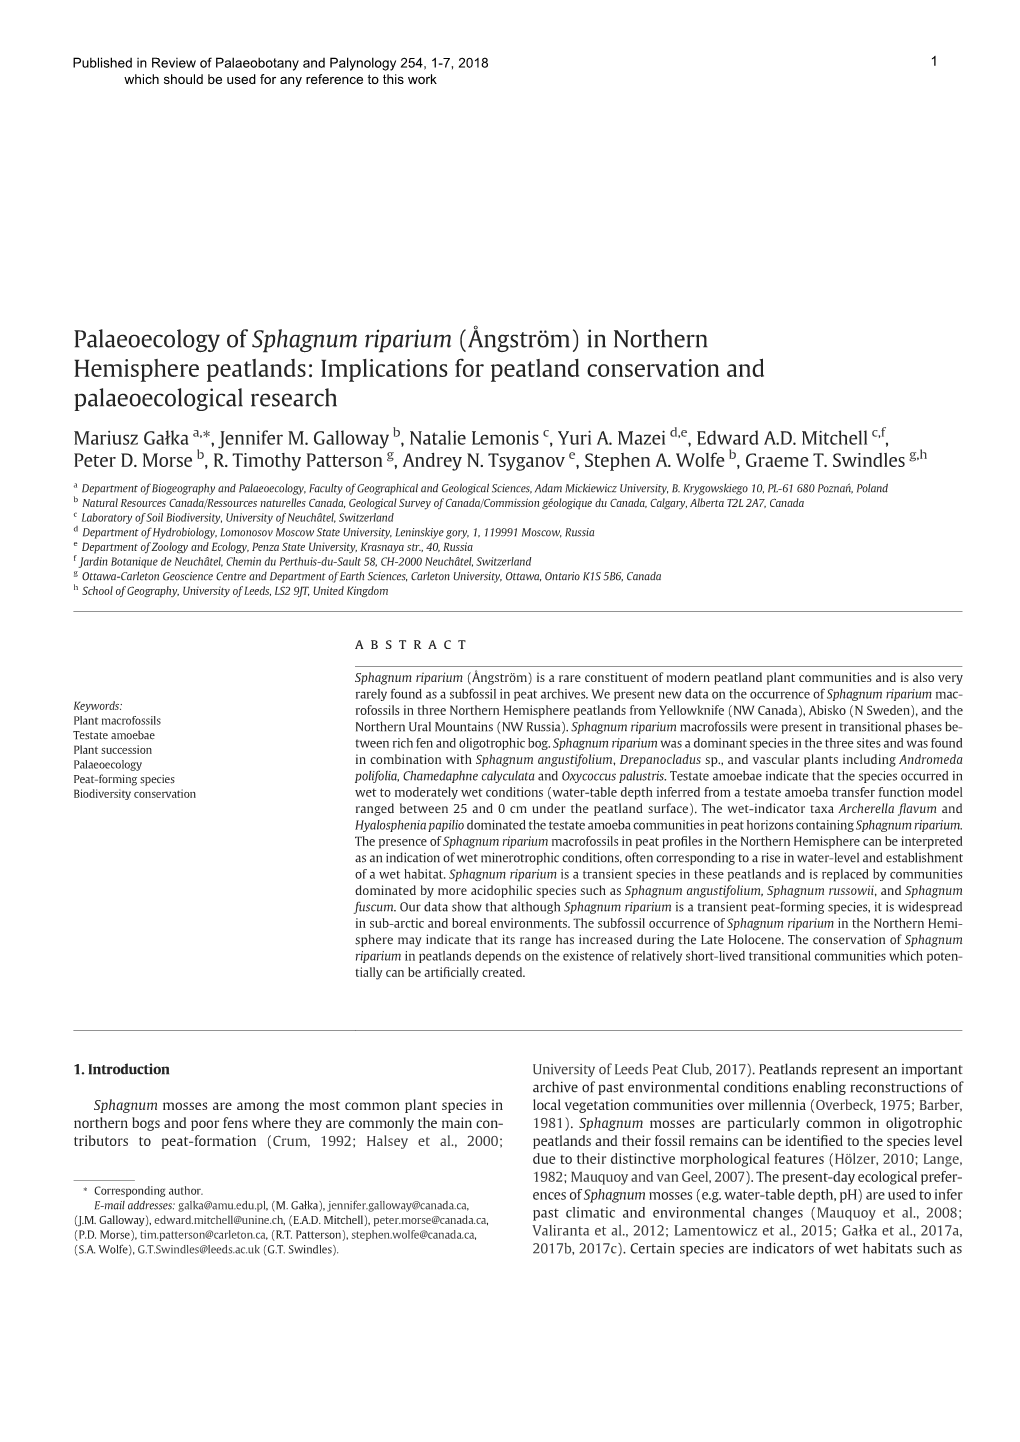 Palaeoecology of Sphagnum Riparium (Ångström) in Northern Hemisphere Peatlands: Implications for Peatland Conservation and Palaeoecological Research